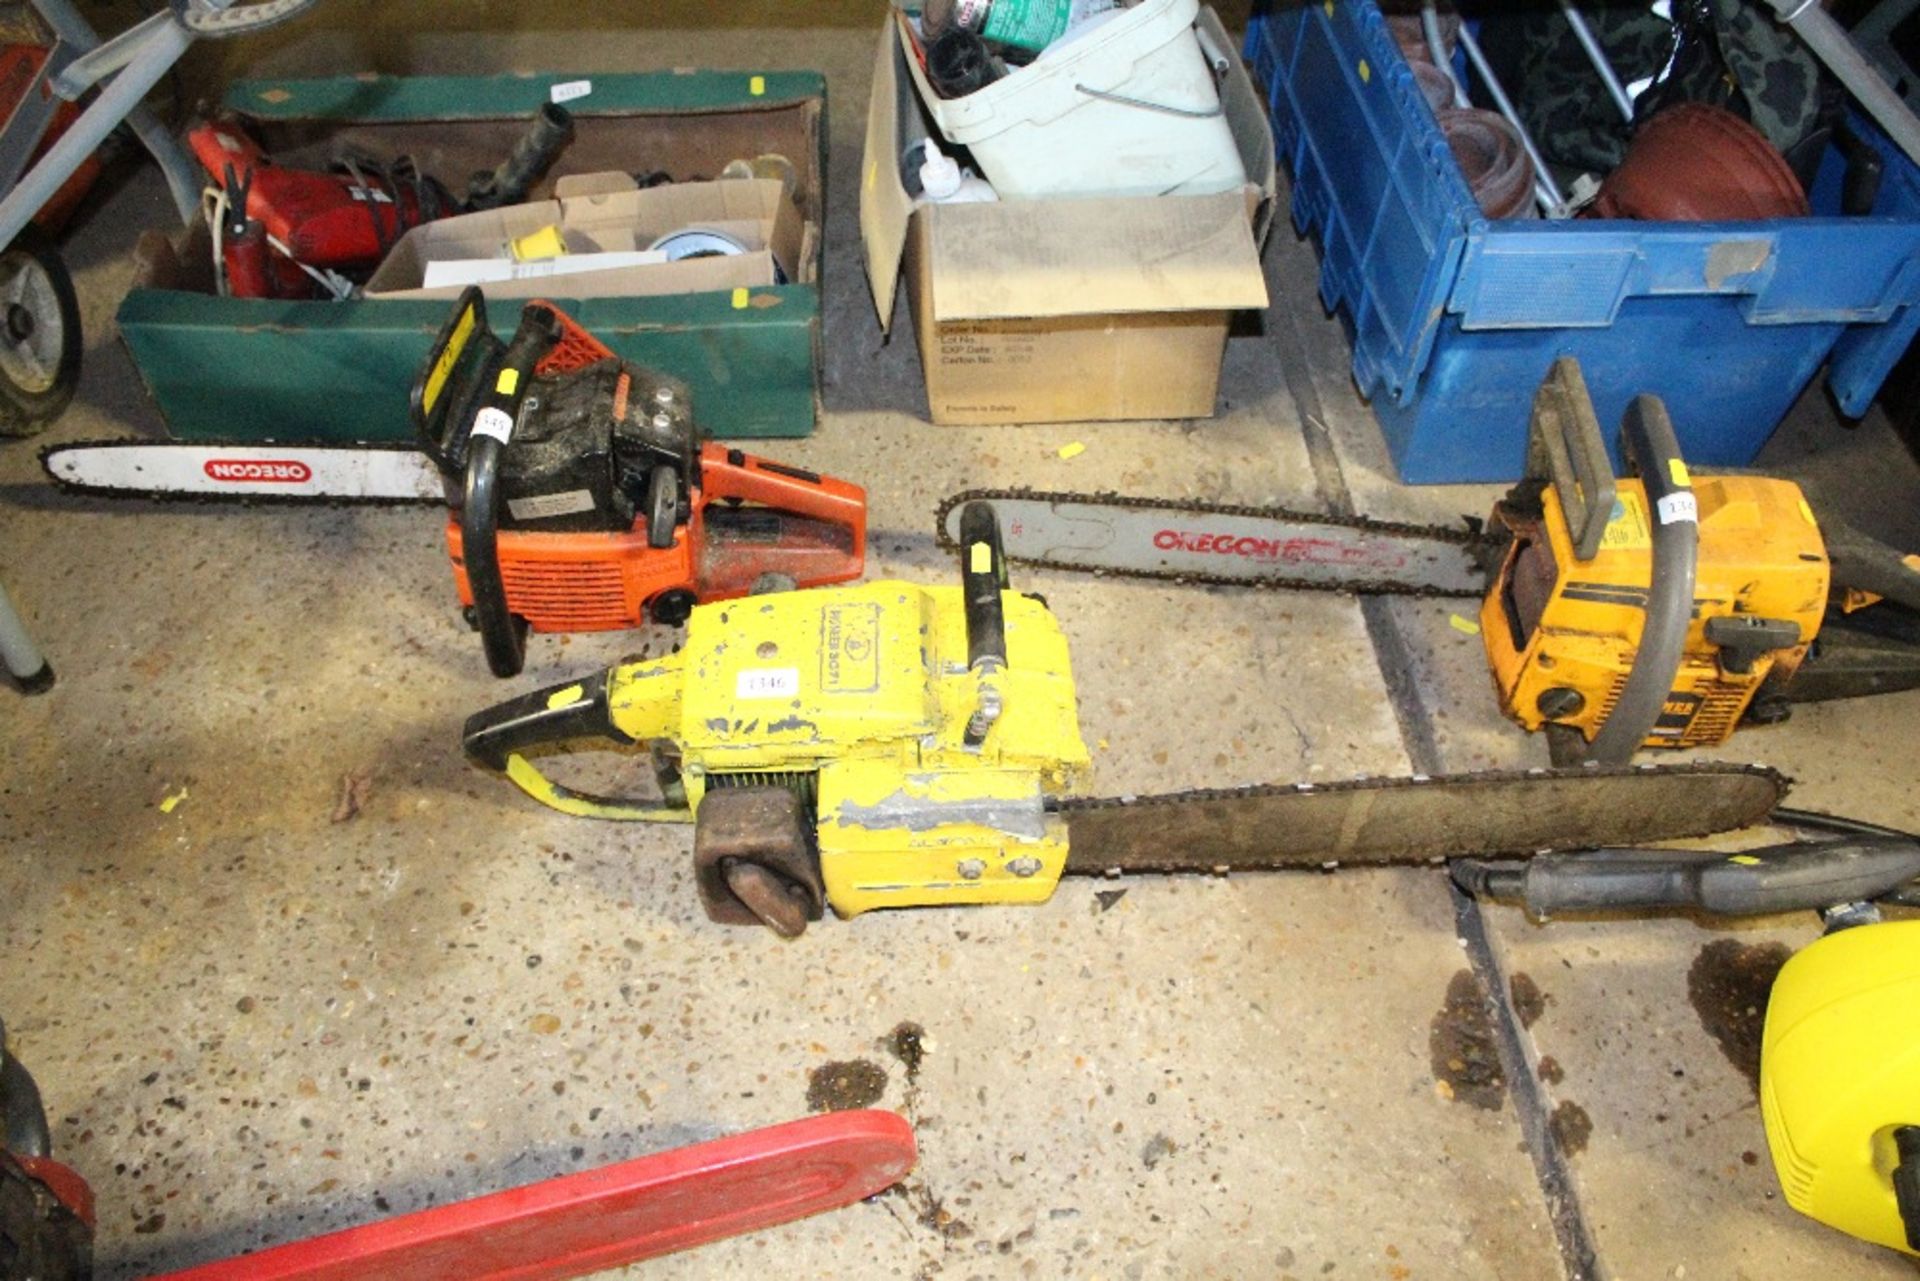 A Pioneer 3071 petrol chain saw